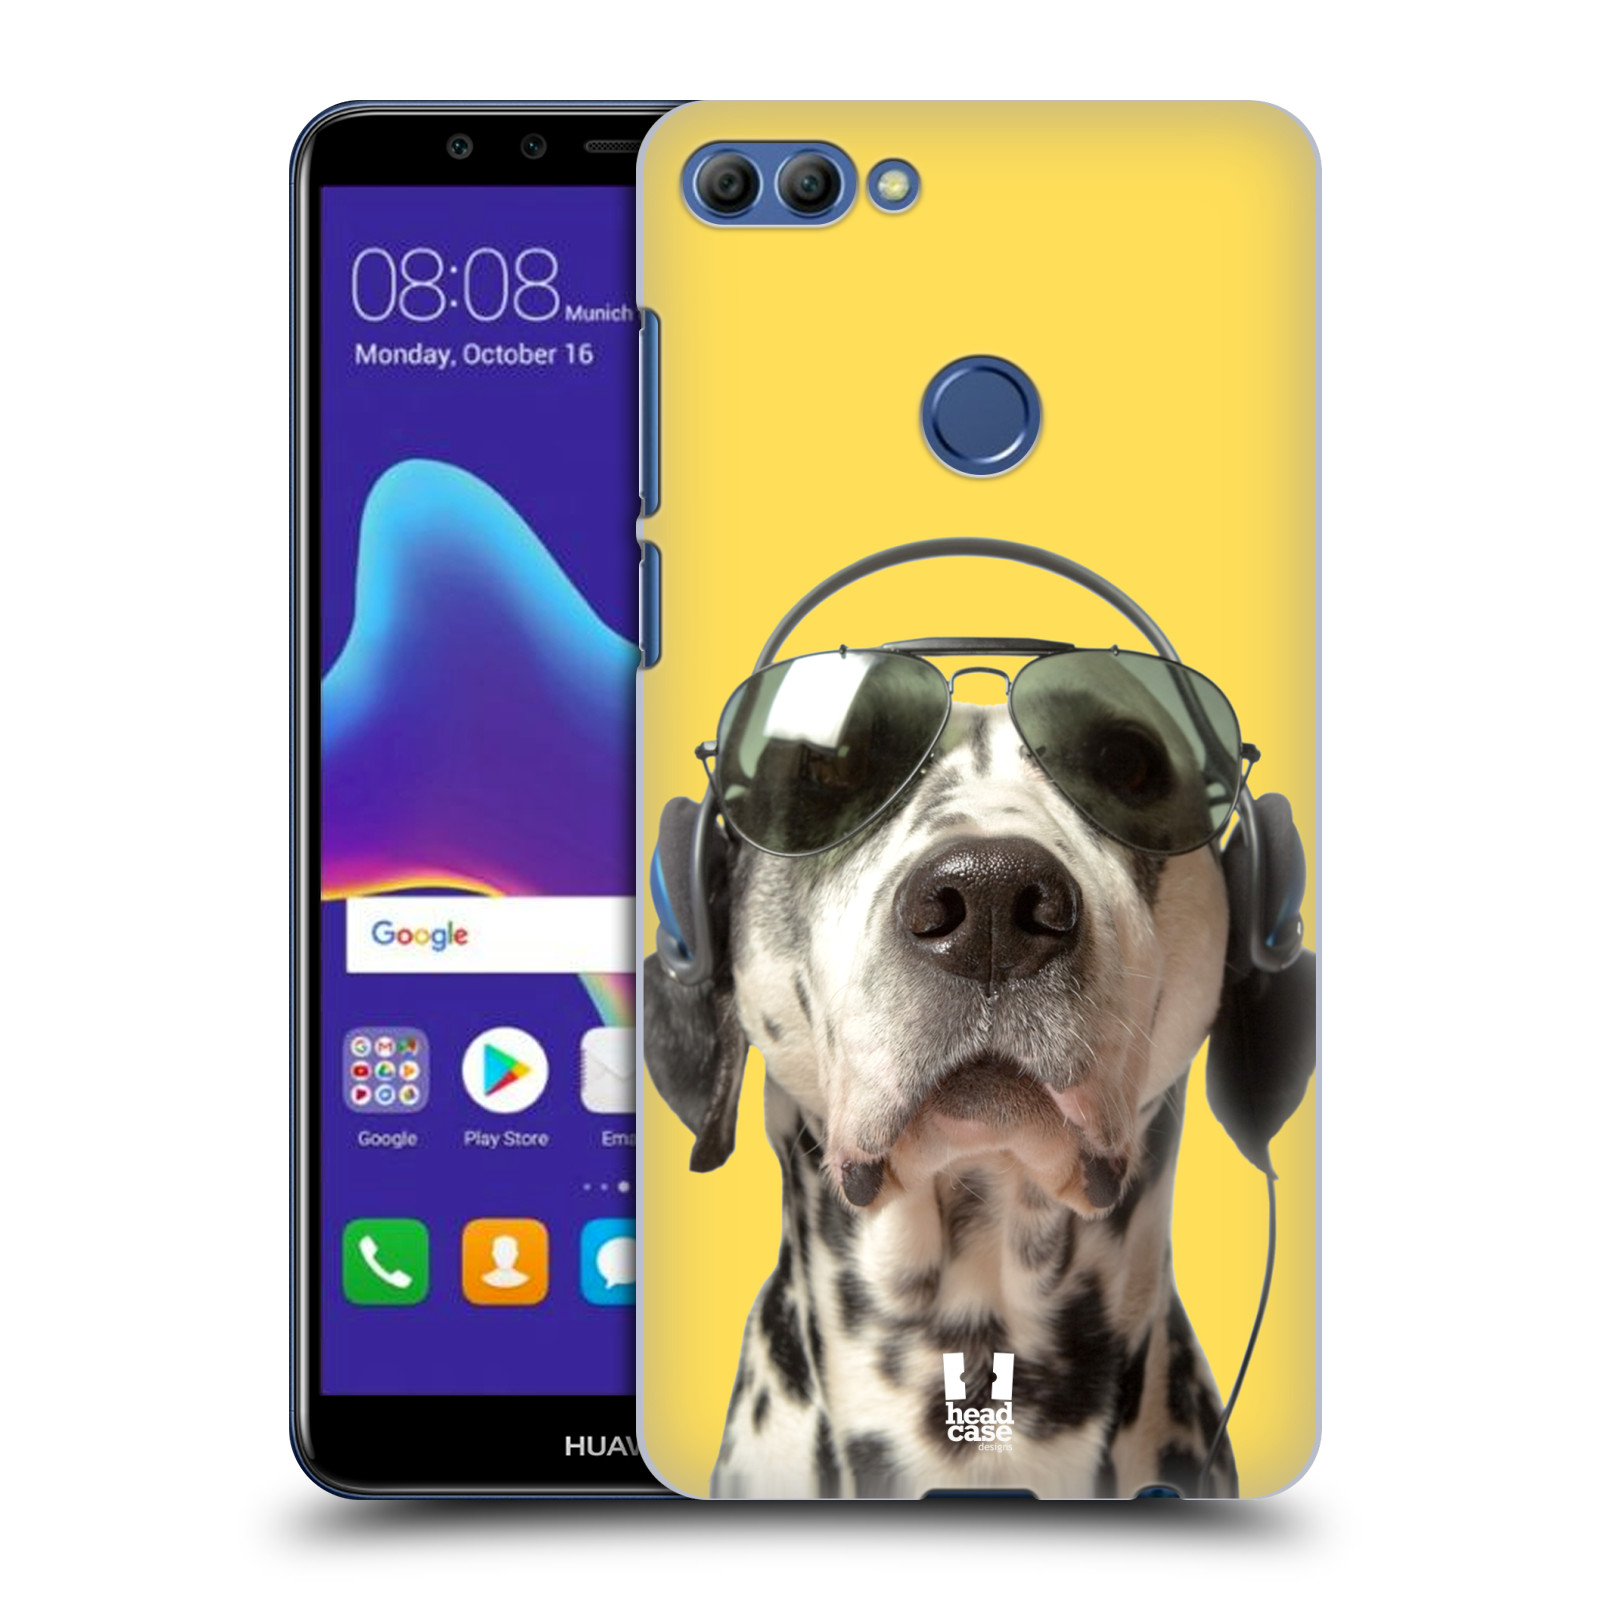 HEAD CASE plastový obal na mobil Huawei Y9 2018 vzor Legrační zvířátka dalmatin se sluchátky žlutá